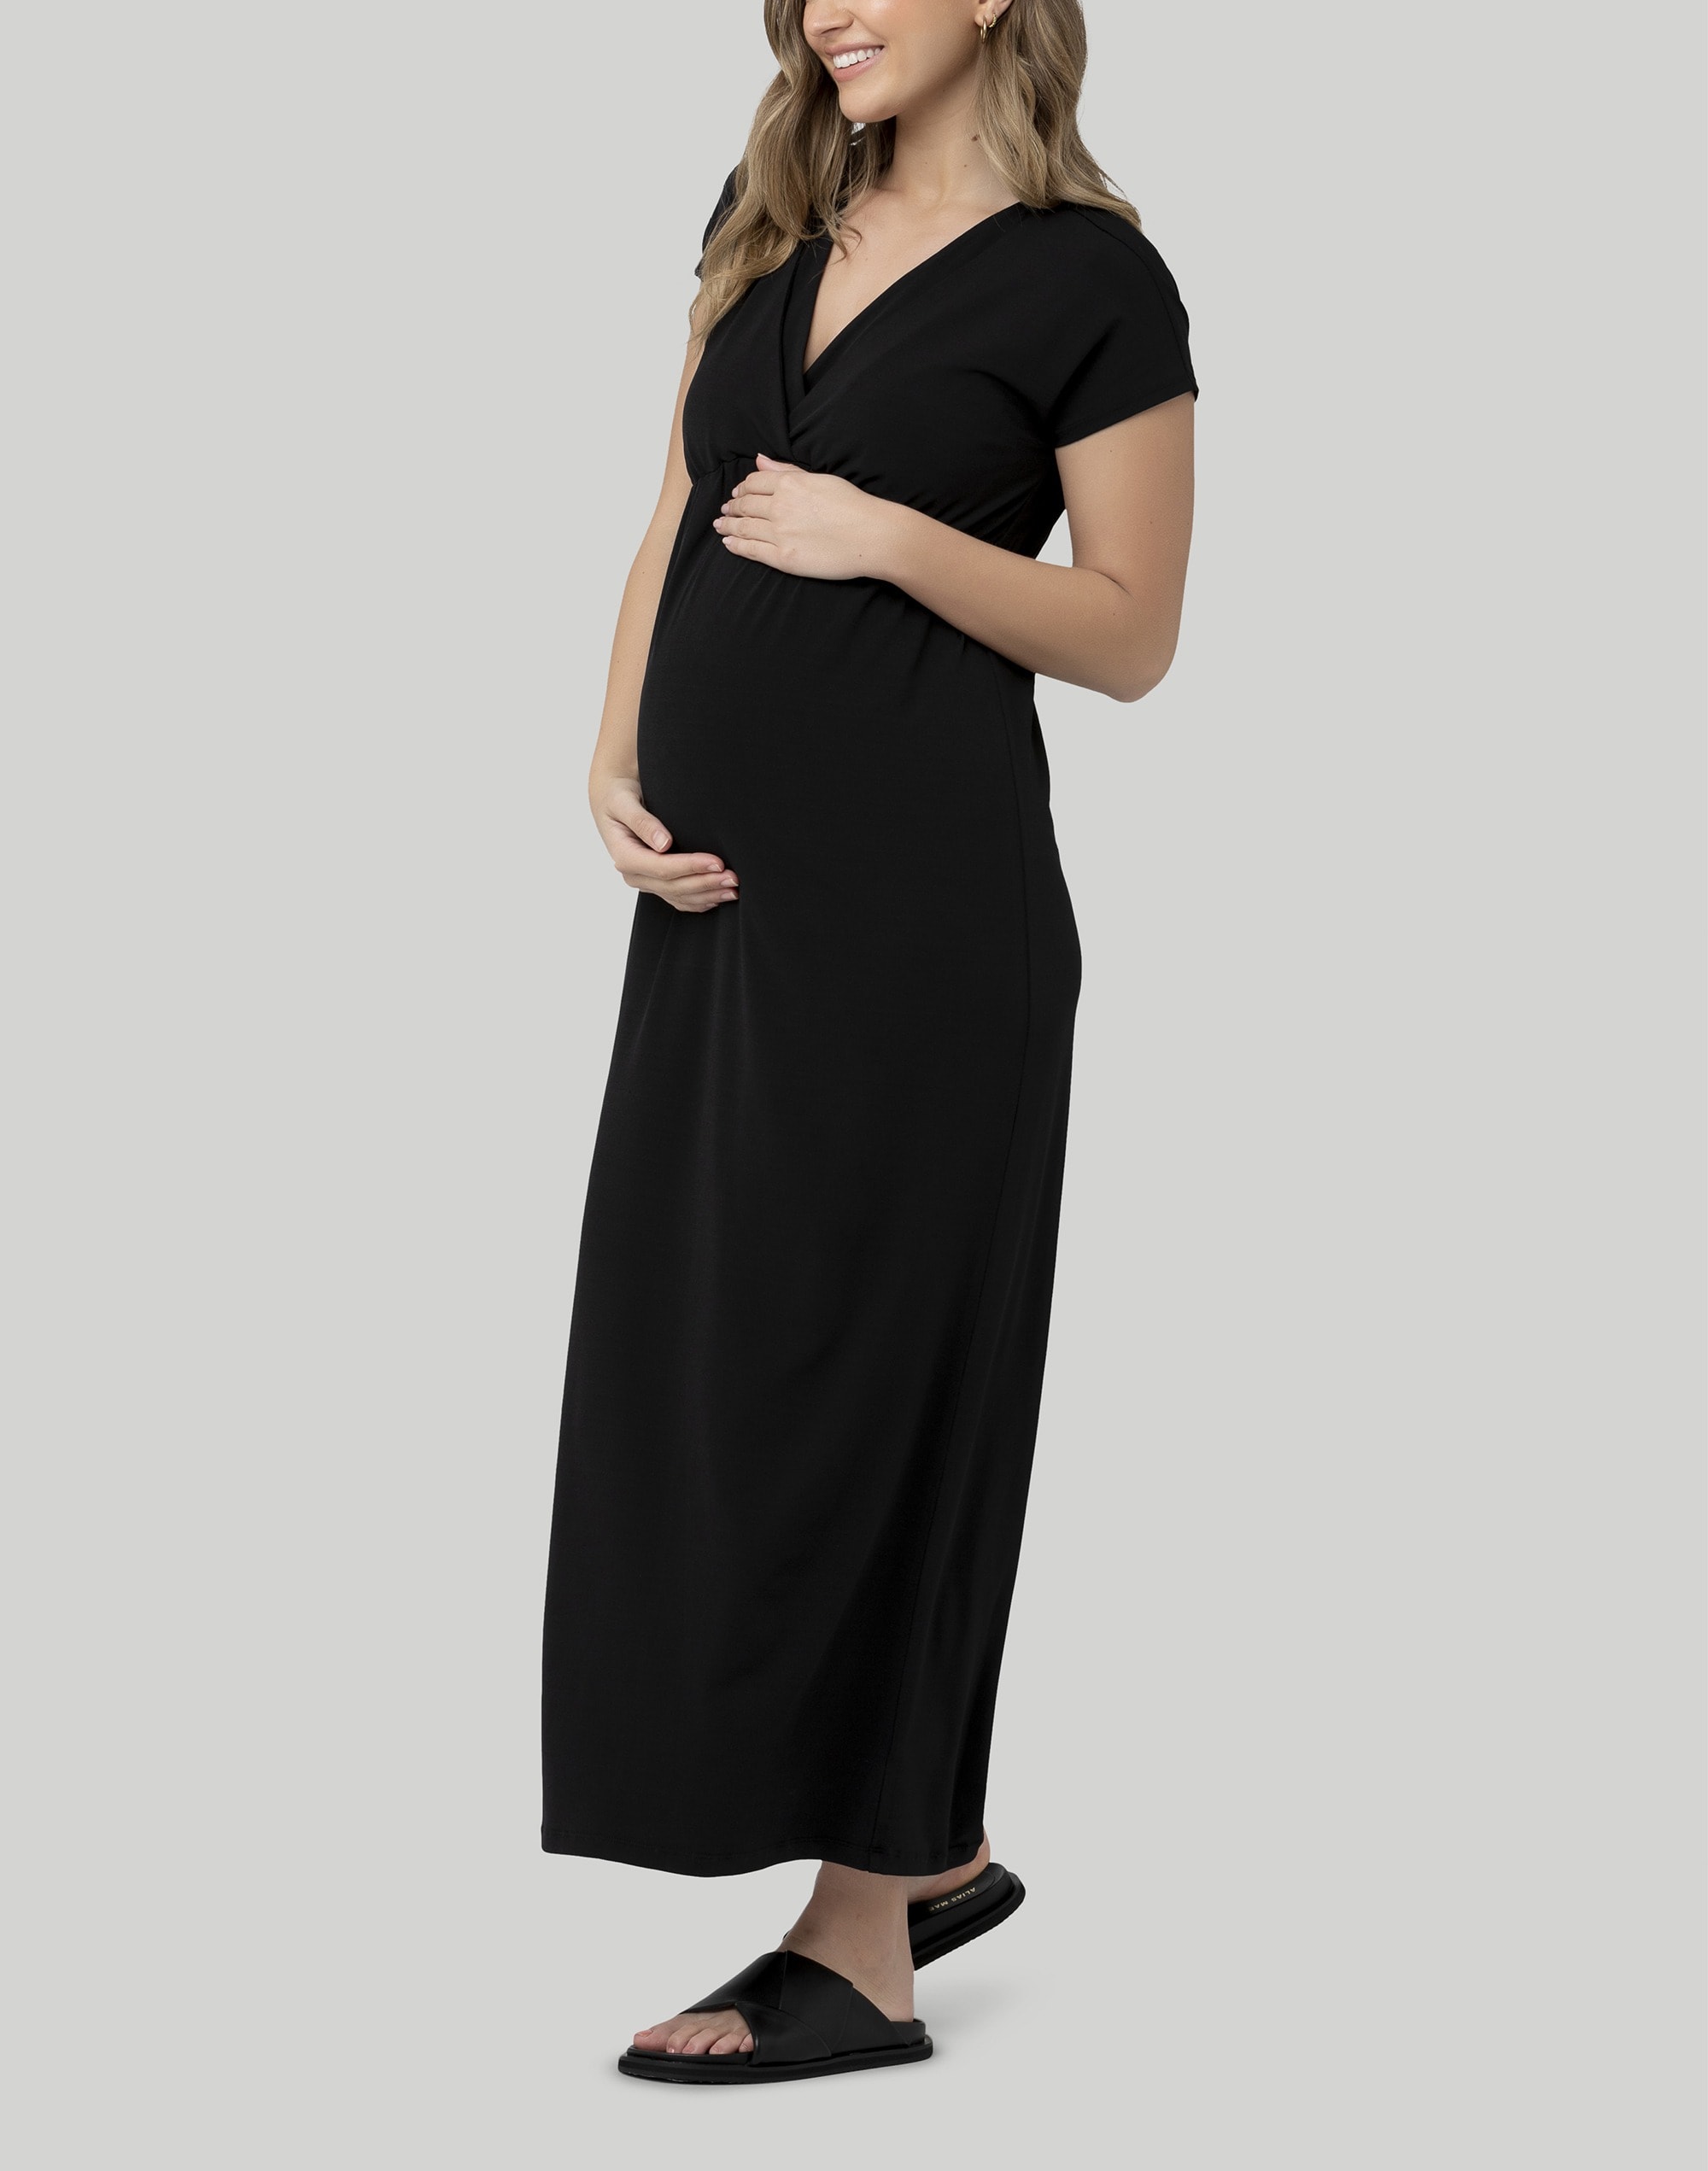 Ripe Maternity Size Large Long Sleeve Sweater Maxi Dress Black